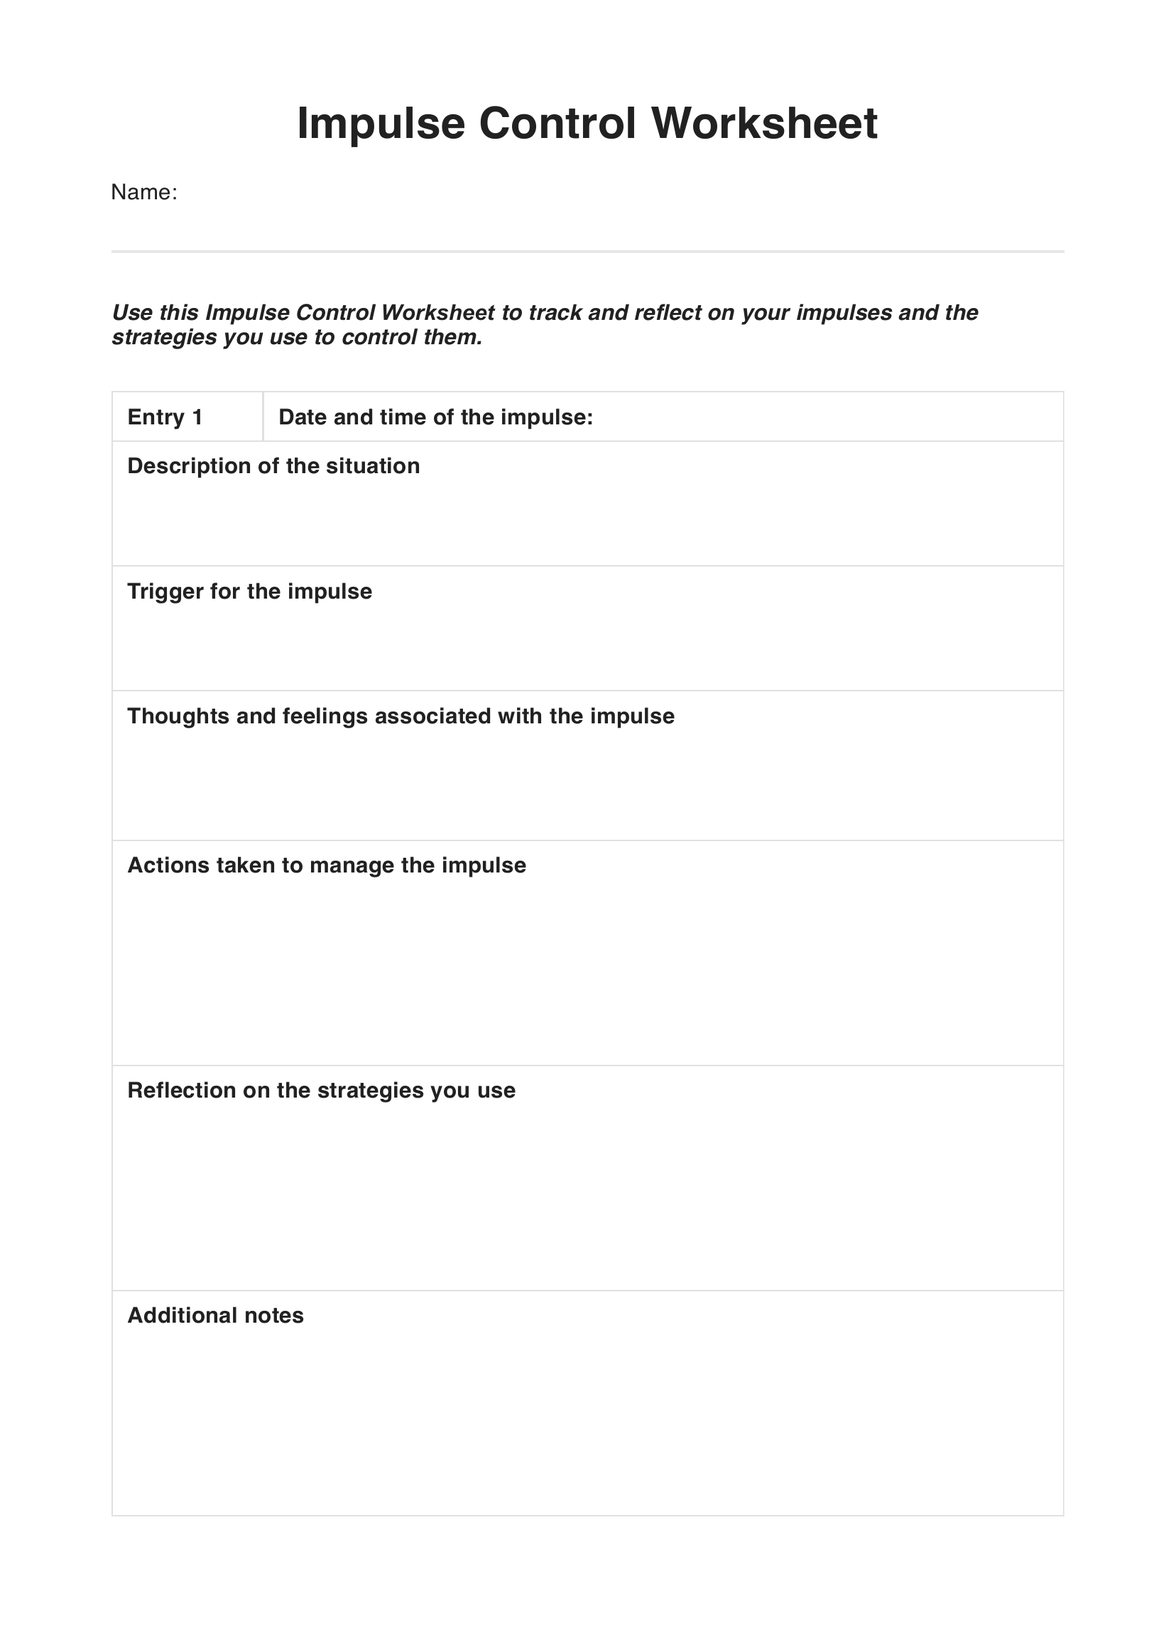 Impulse Control Worksheet PDF Example